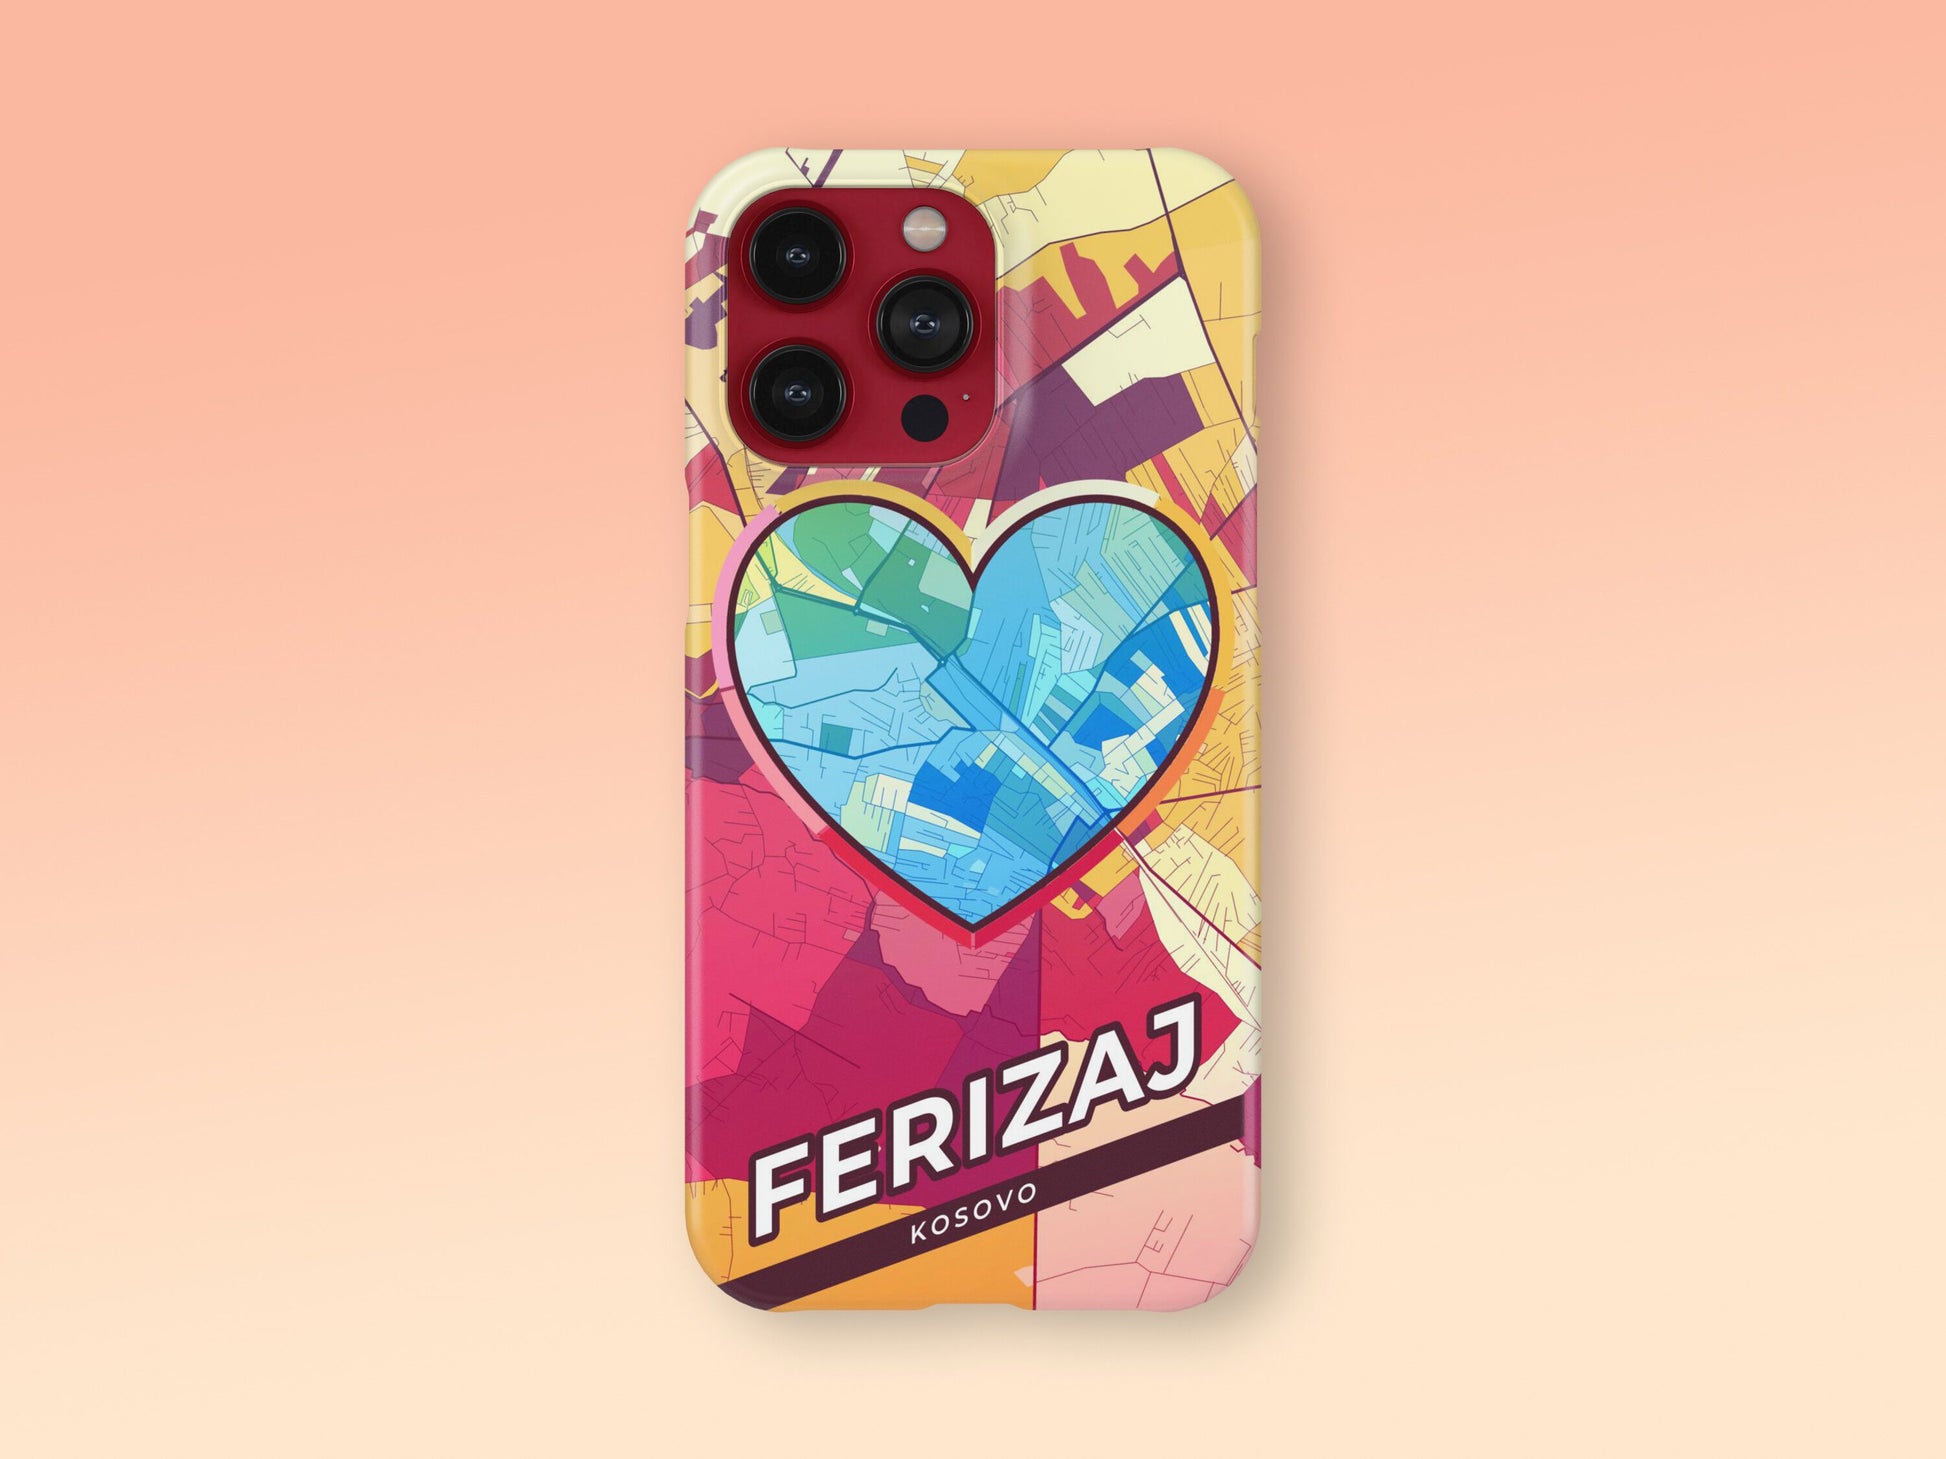 Ferizaj / Uroševac Kosovo slim phone case with colorful icon. Birthday, wedding or housewarming gift. Couple match cases. 2